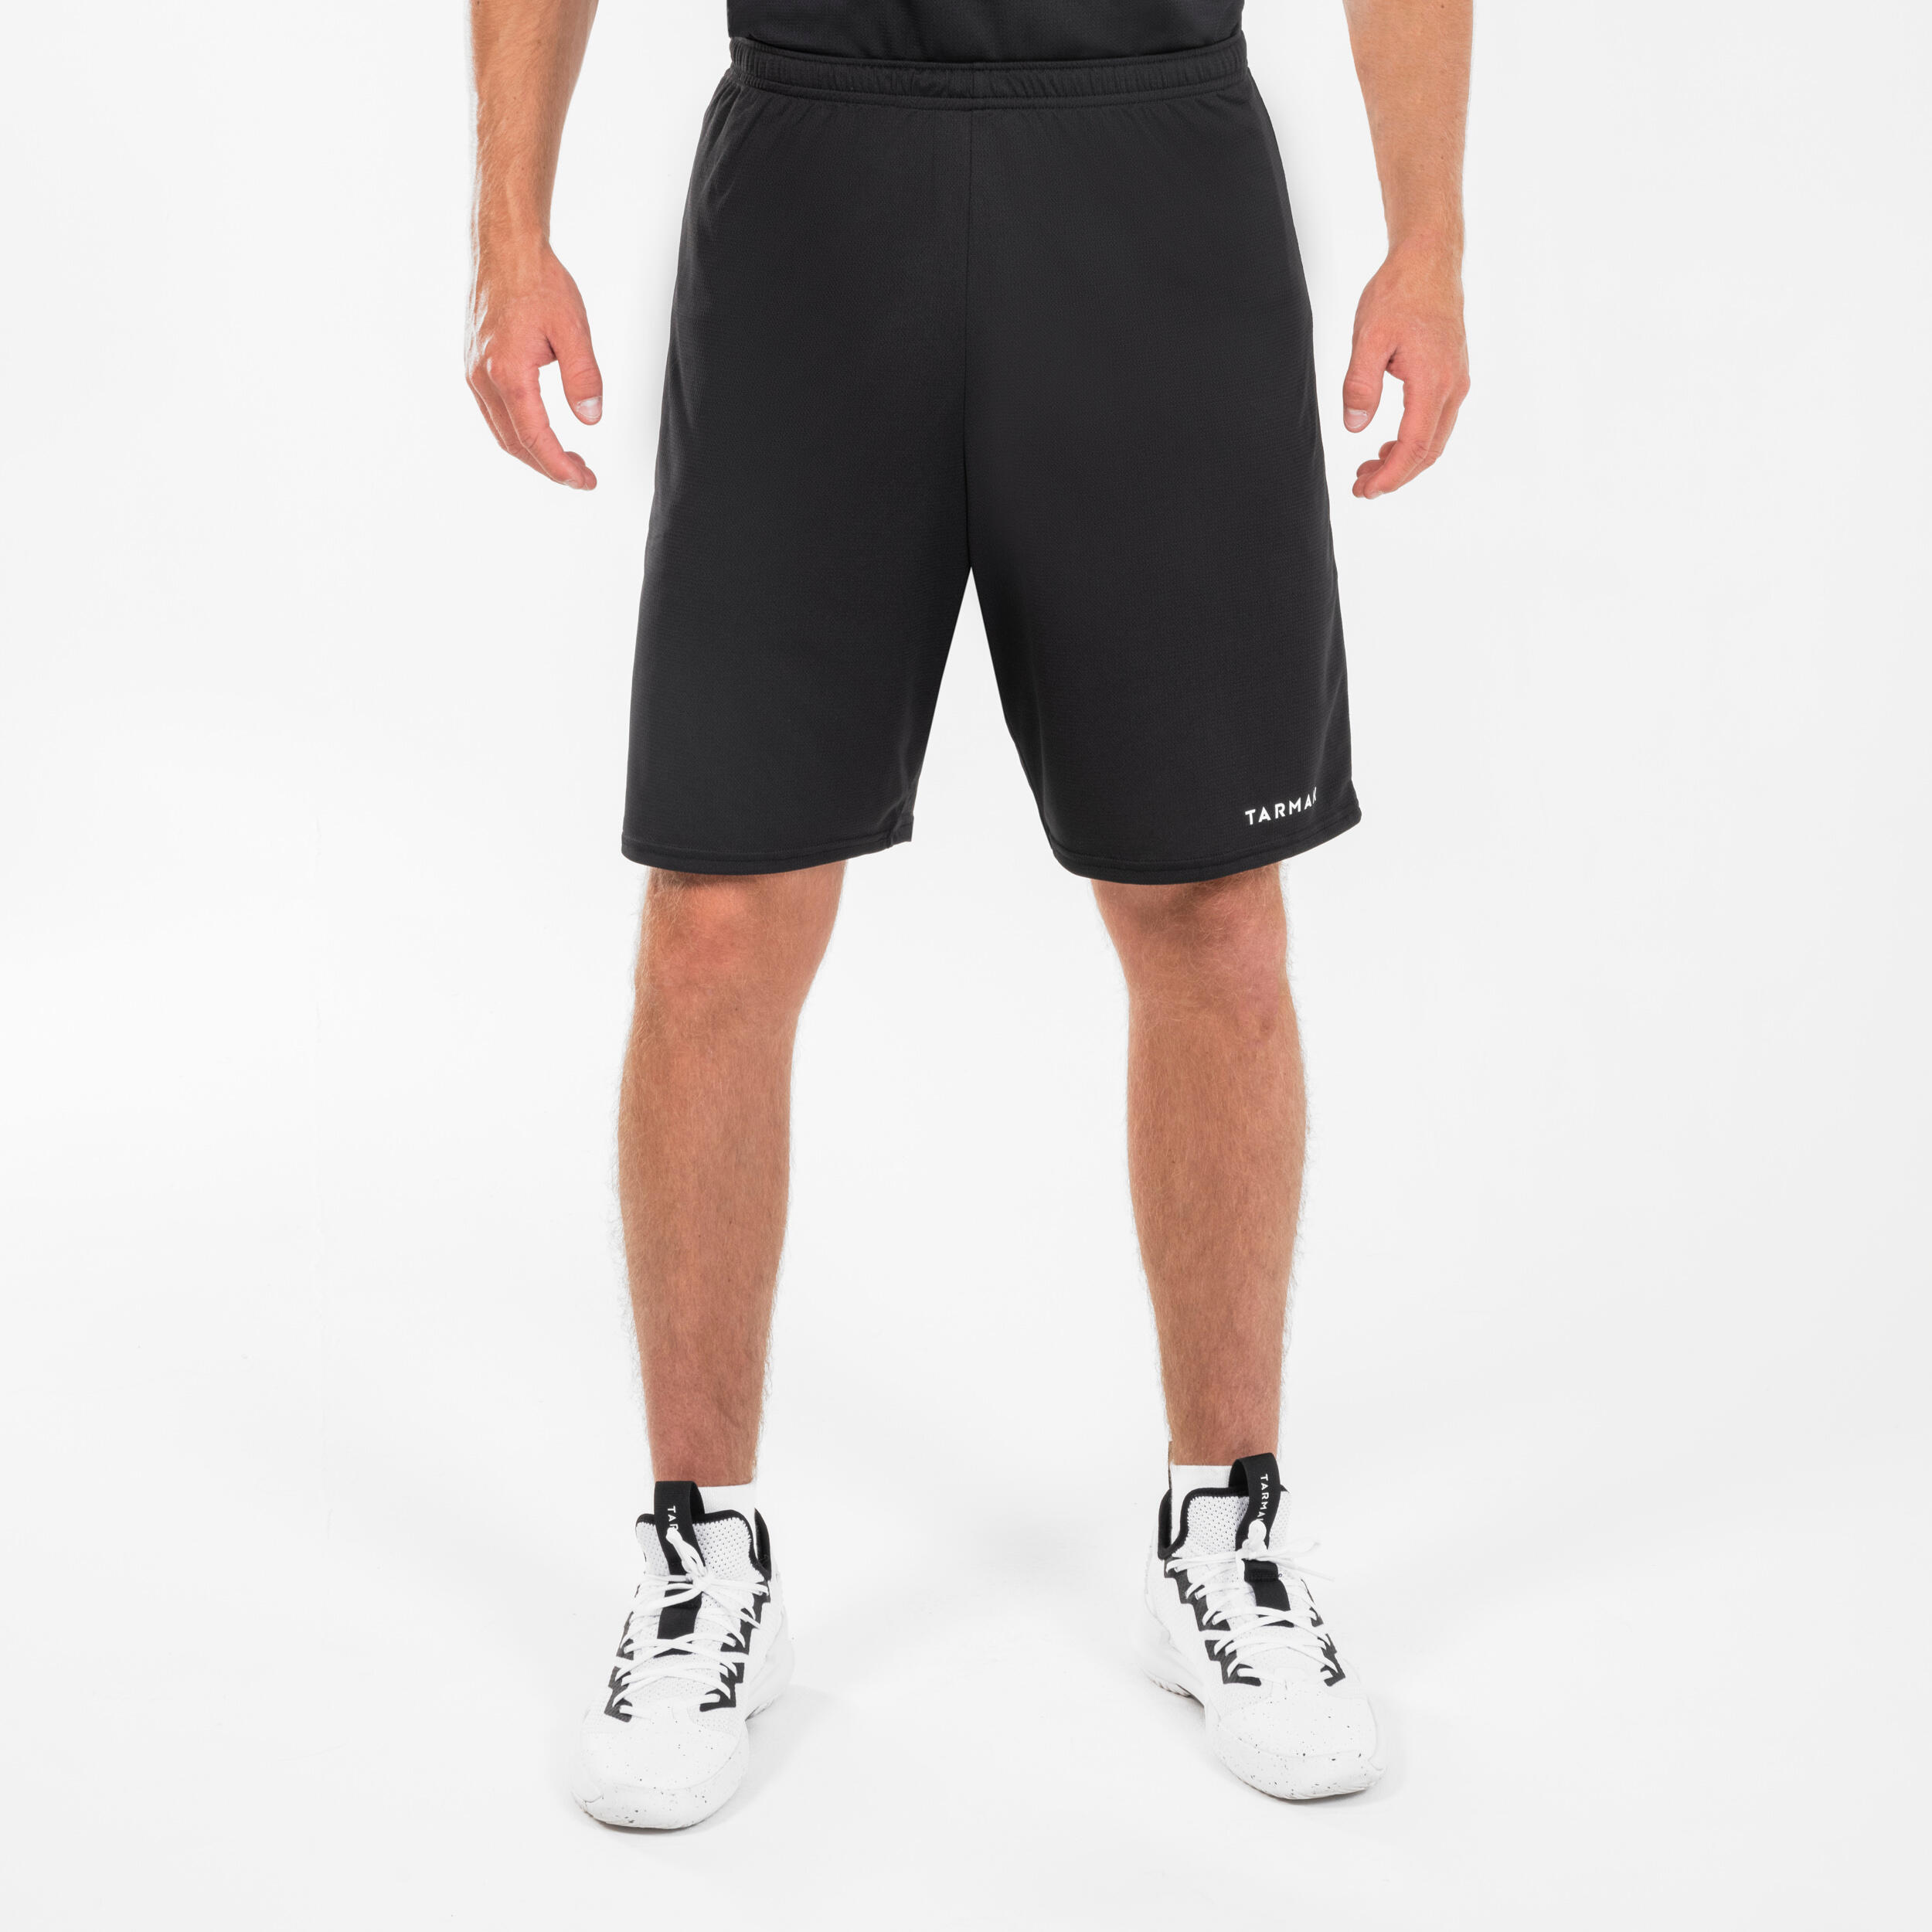 Men Double Layer Sport Shorts Quick Dry Fitness Training Running Half Pants  | eBay